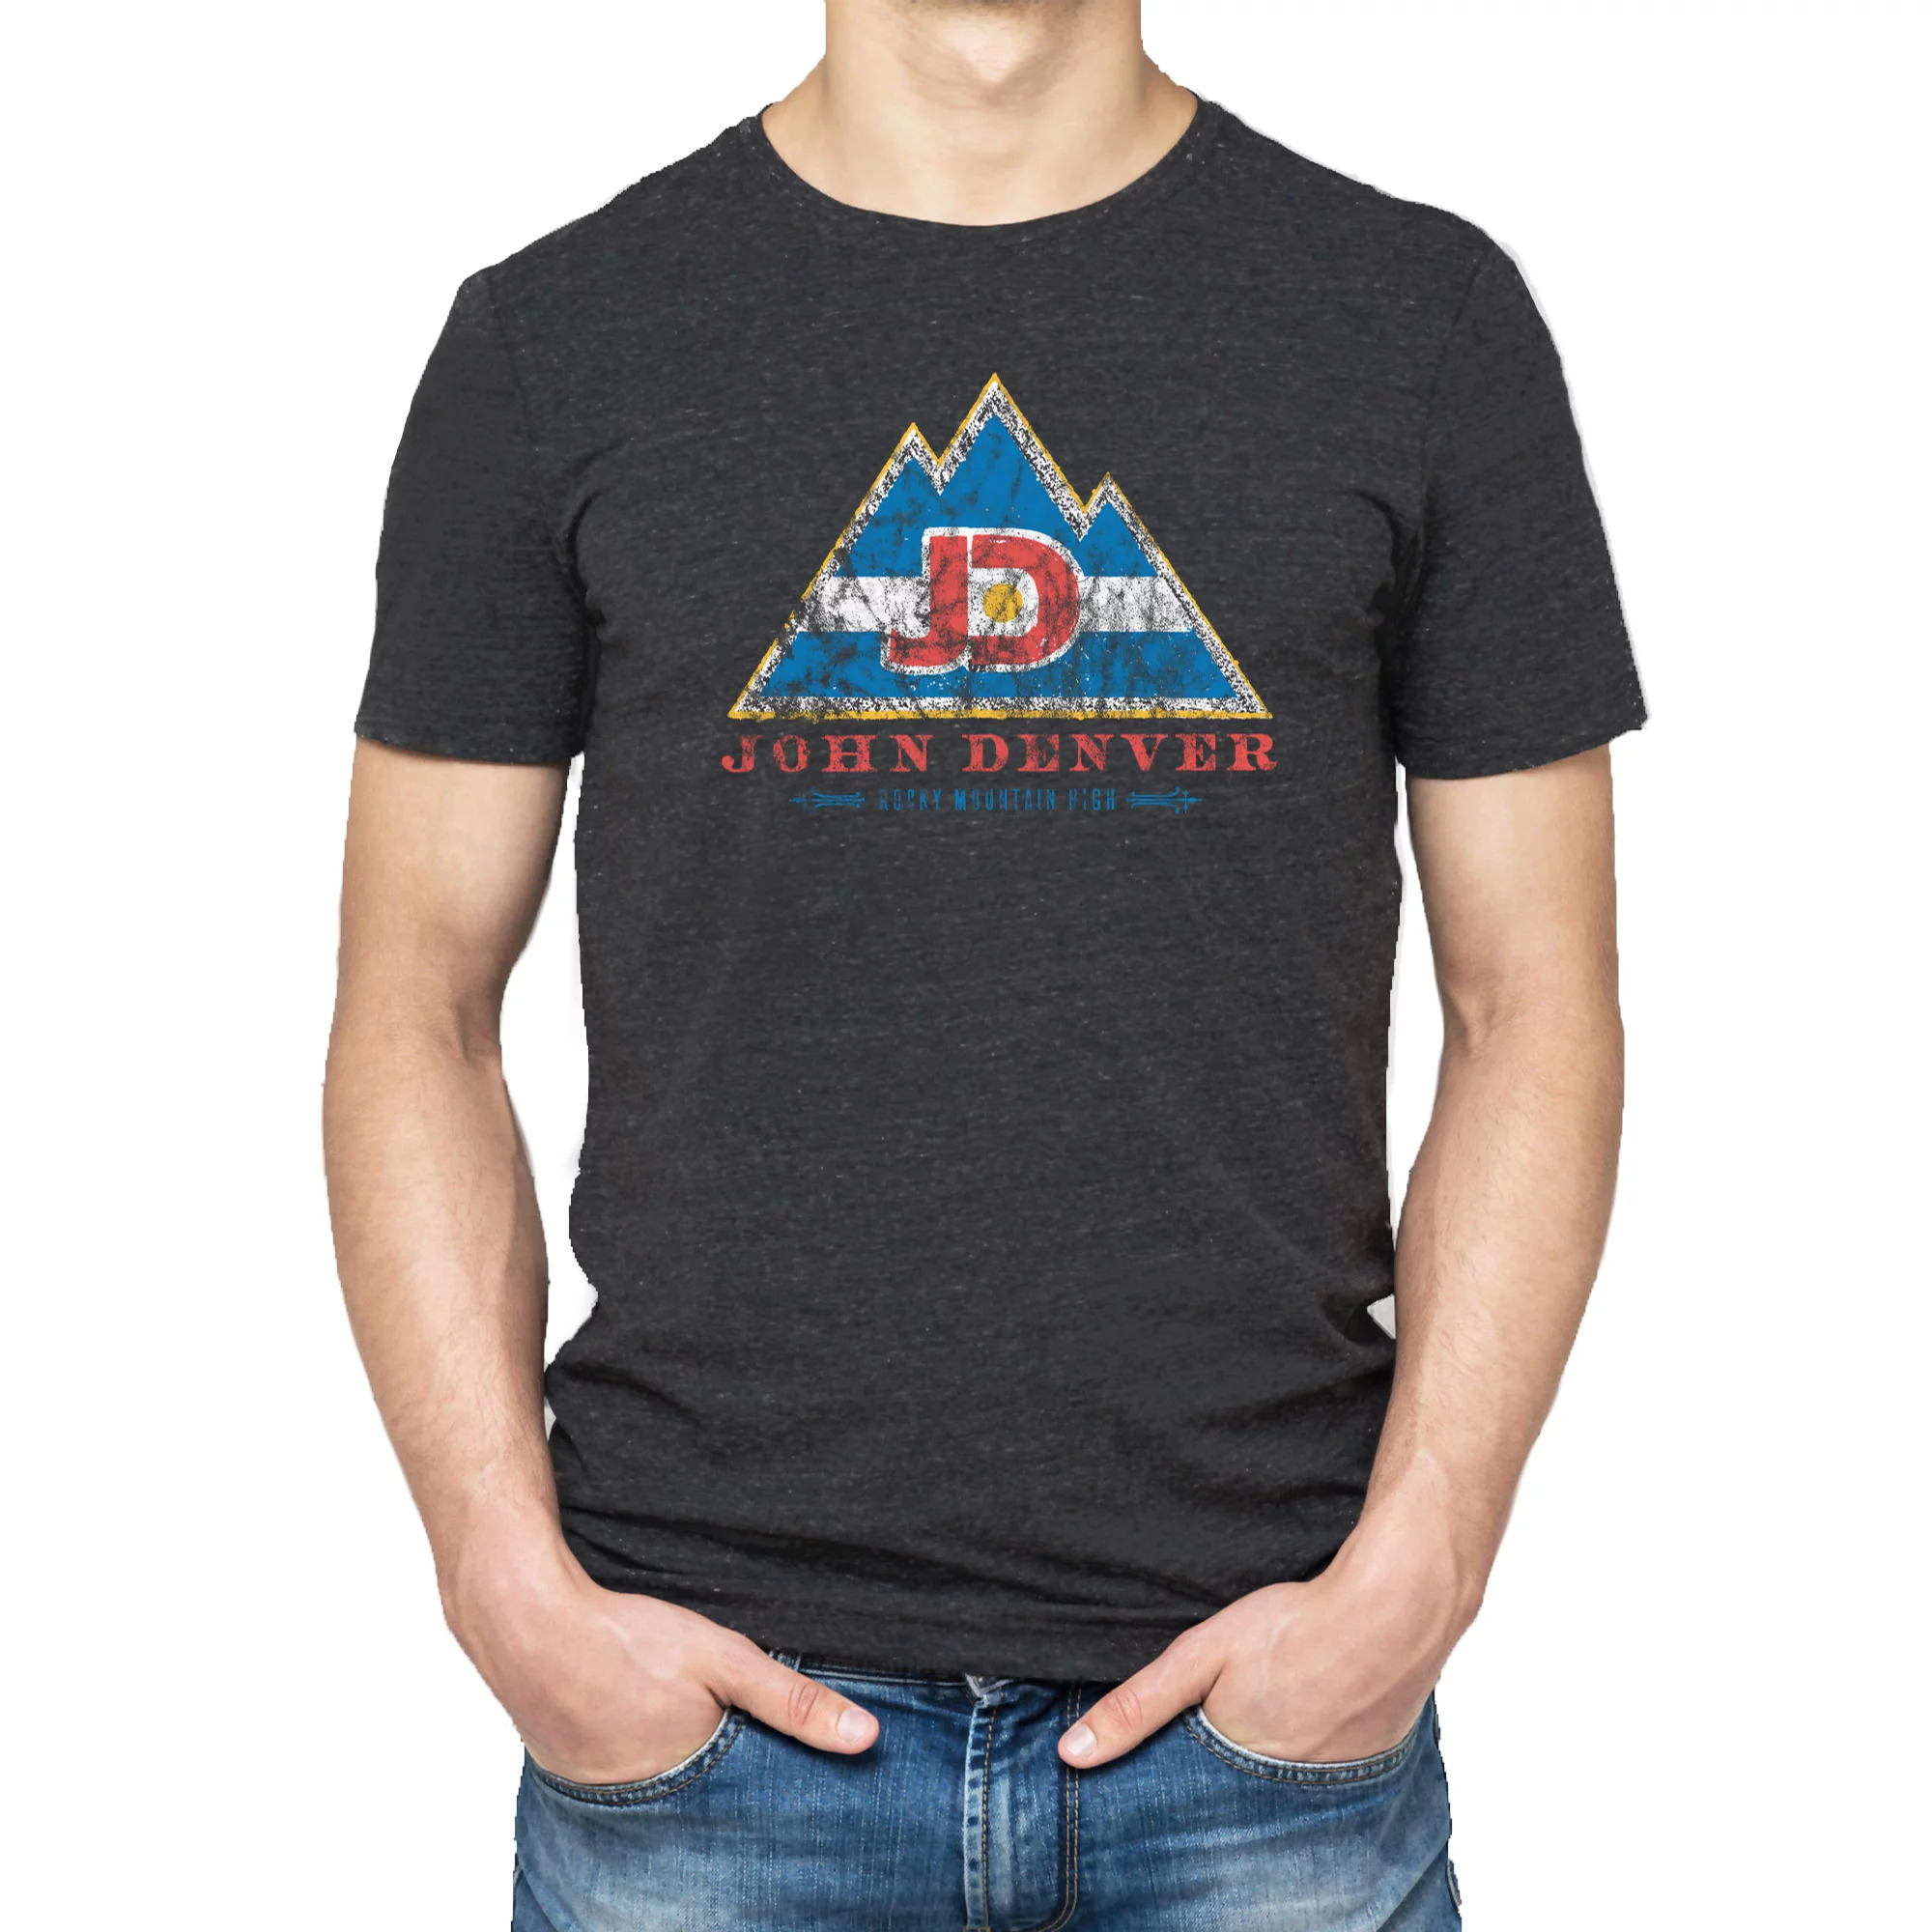 John Denver Men's & Big Men's Short Sleeve Graphic Tee (Black) $4 + Free Shipping w/ Walmart+ or $35+